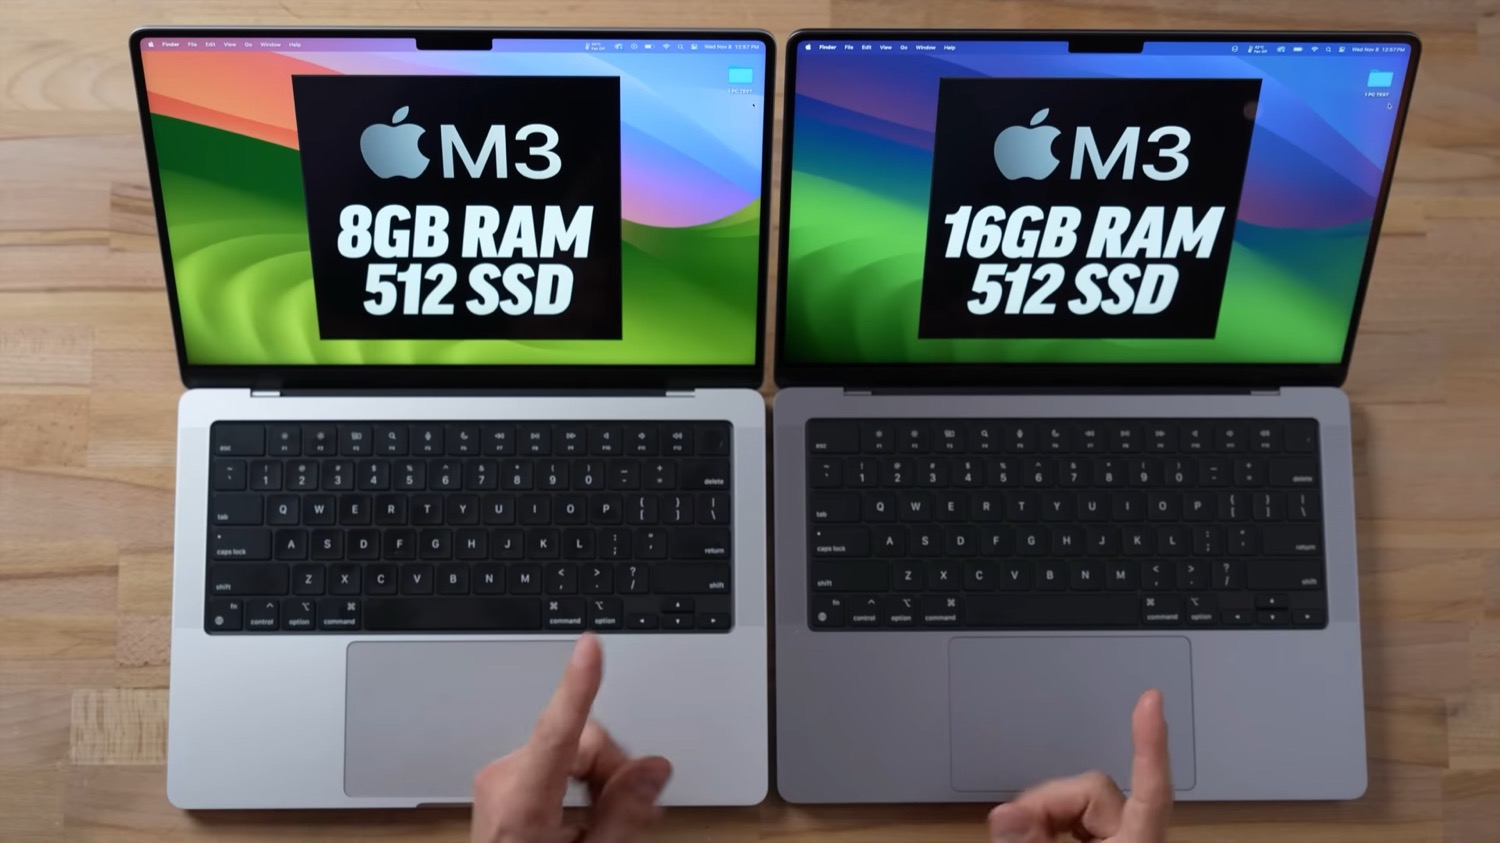 8 GB di RAM, è un’opzione sufficiente per MacBook Pro M3?  No, secondo questi test